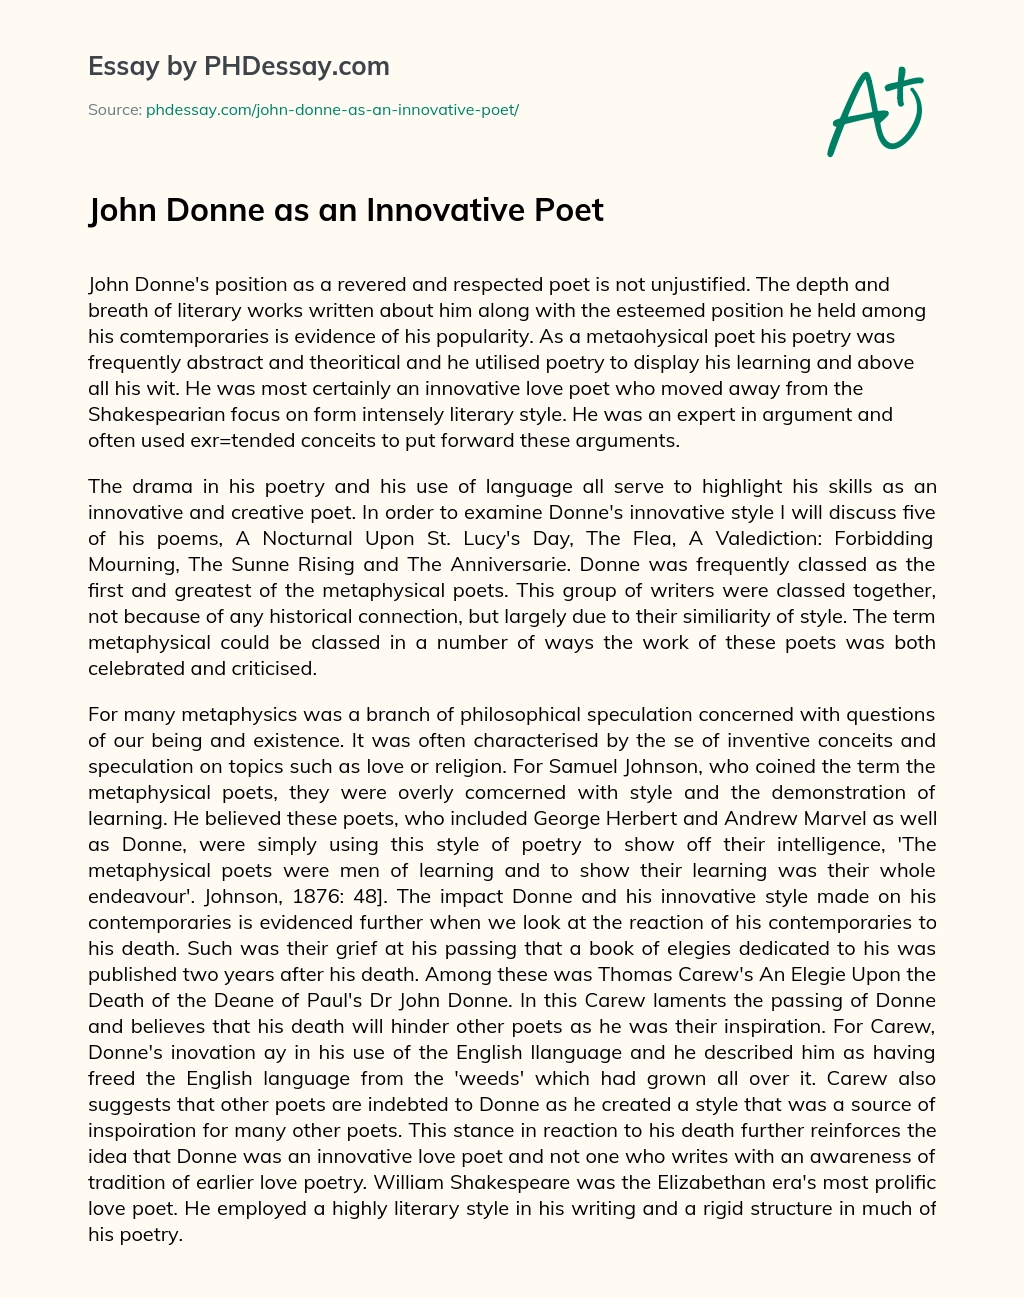 John Donne as an Innovative Poet essay